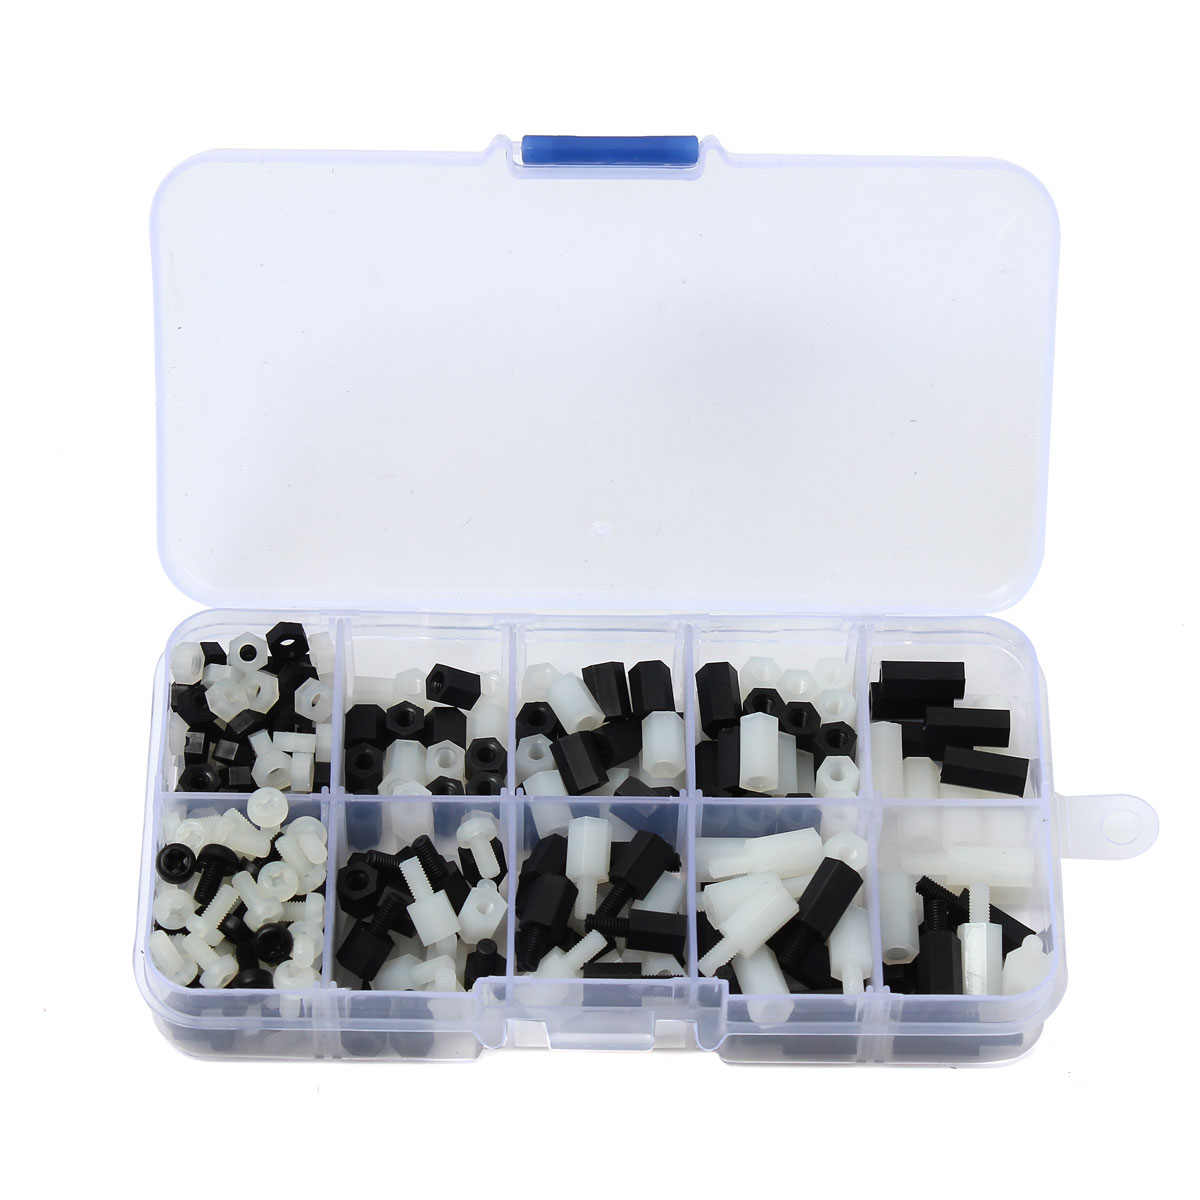 

Suleve™ M3NH10 M3 Nylon Hex Screw Nut Spacer Standoff Assortment Kit Box Black and White 300pcs